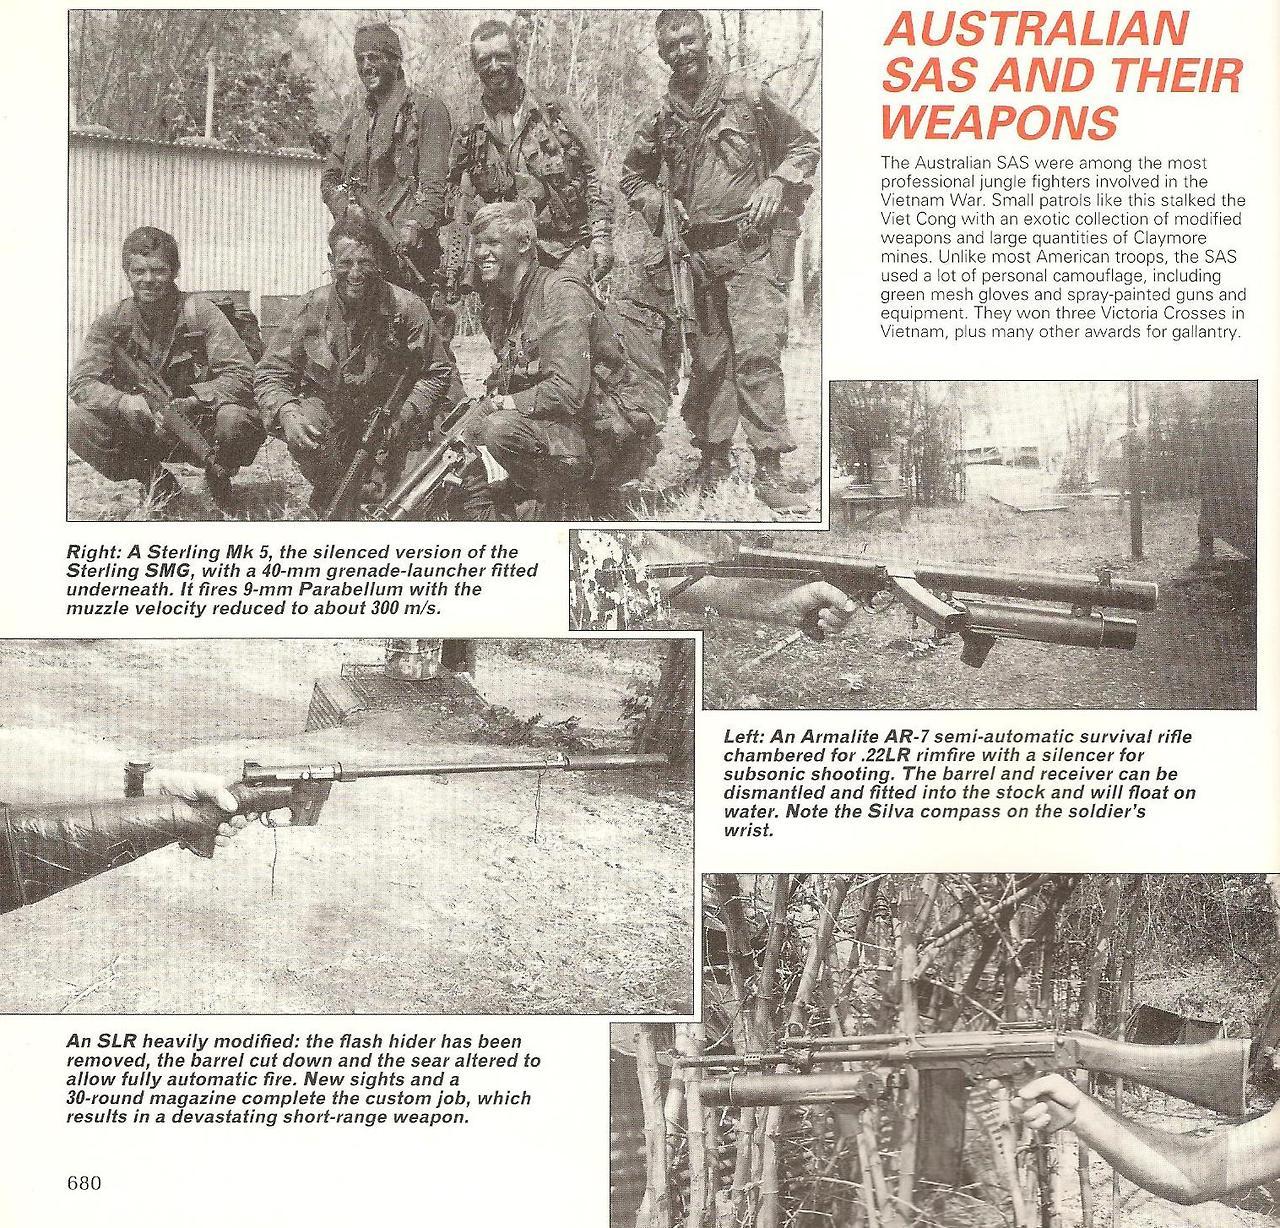 M50 Ontos: The Forgotten Tank-killer